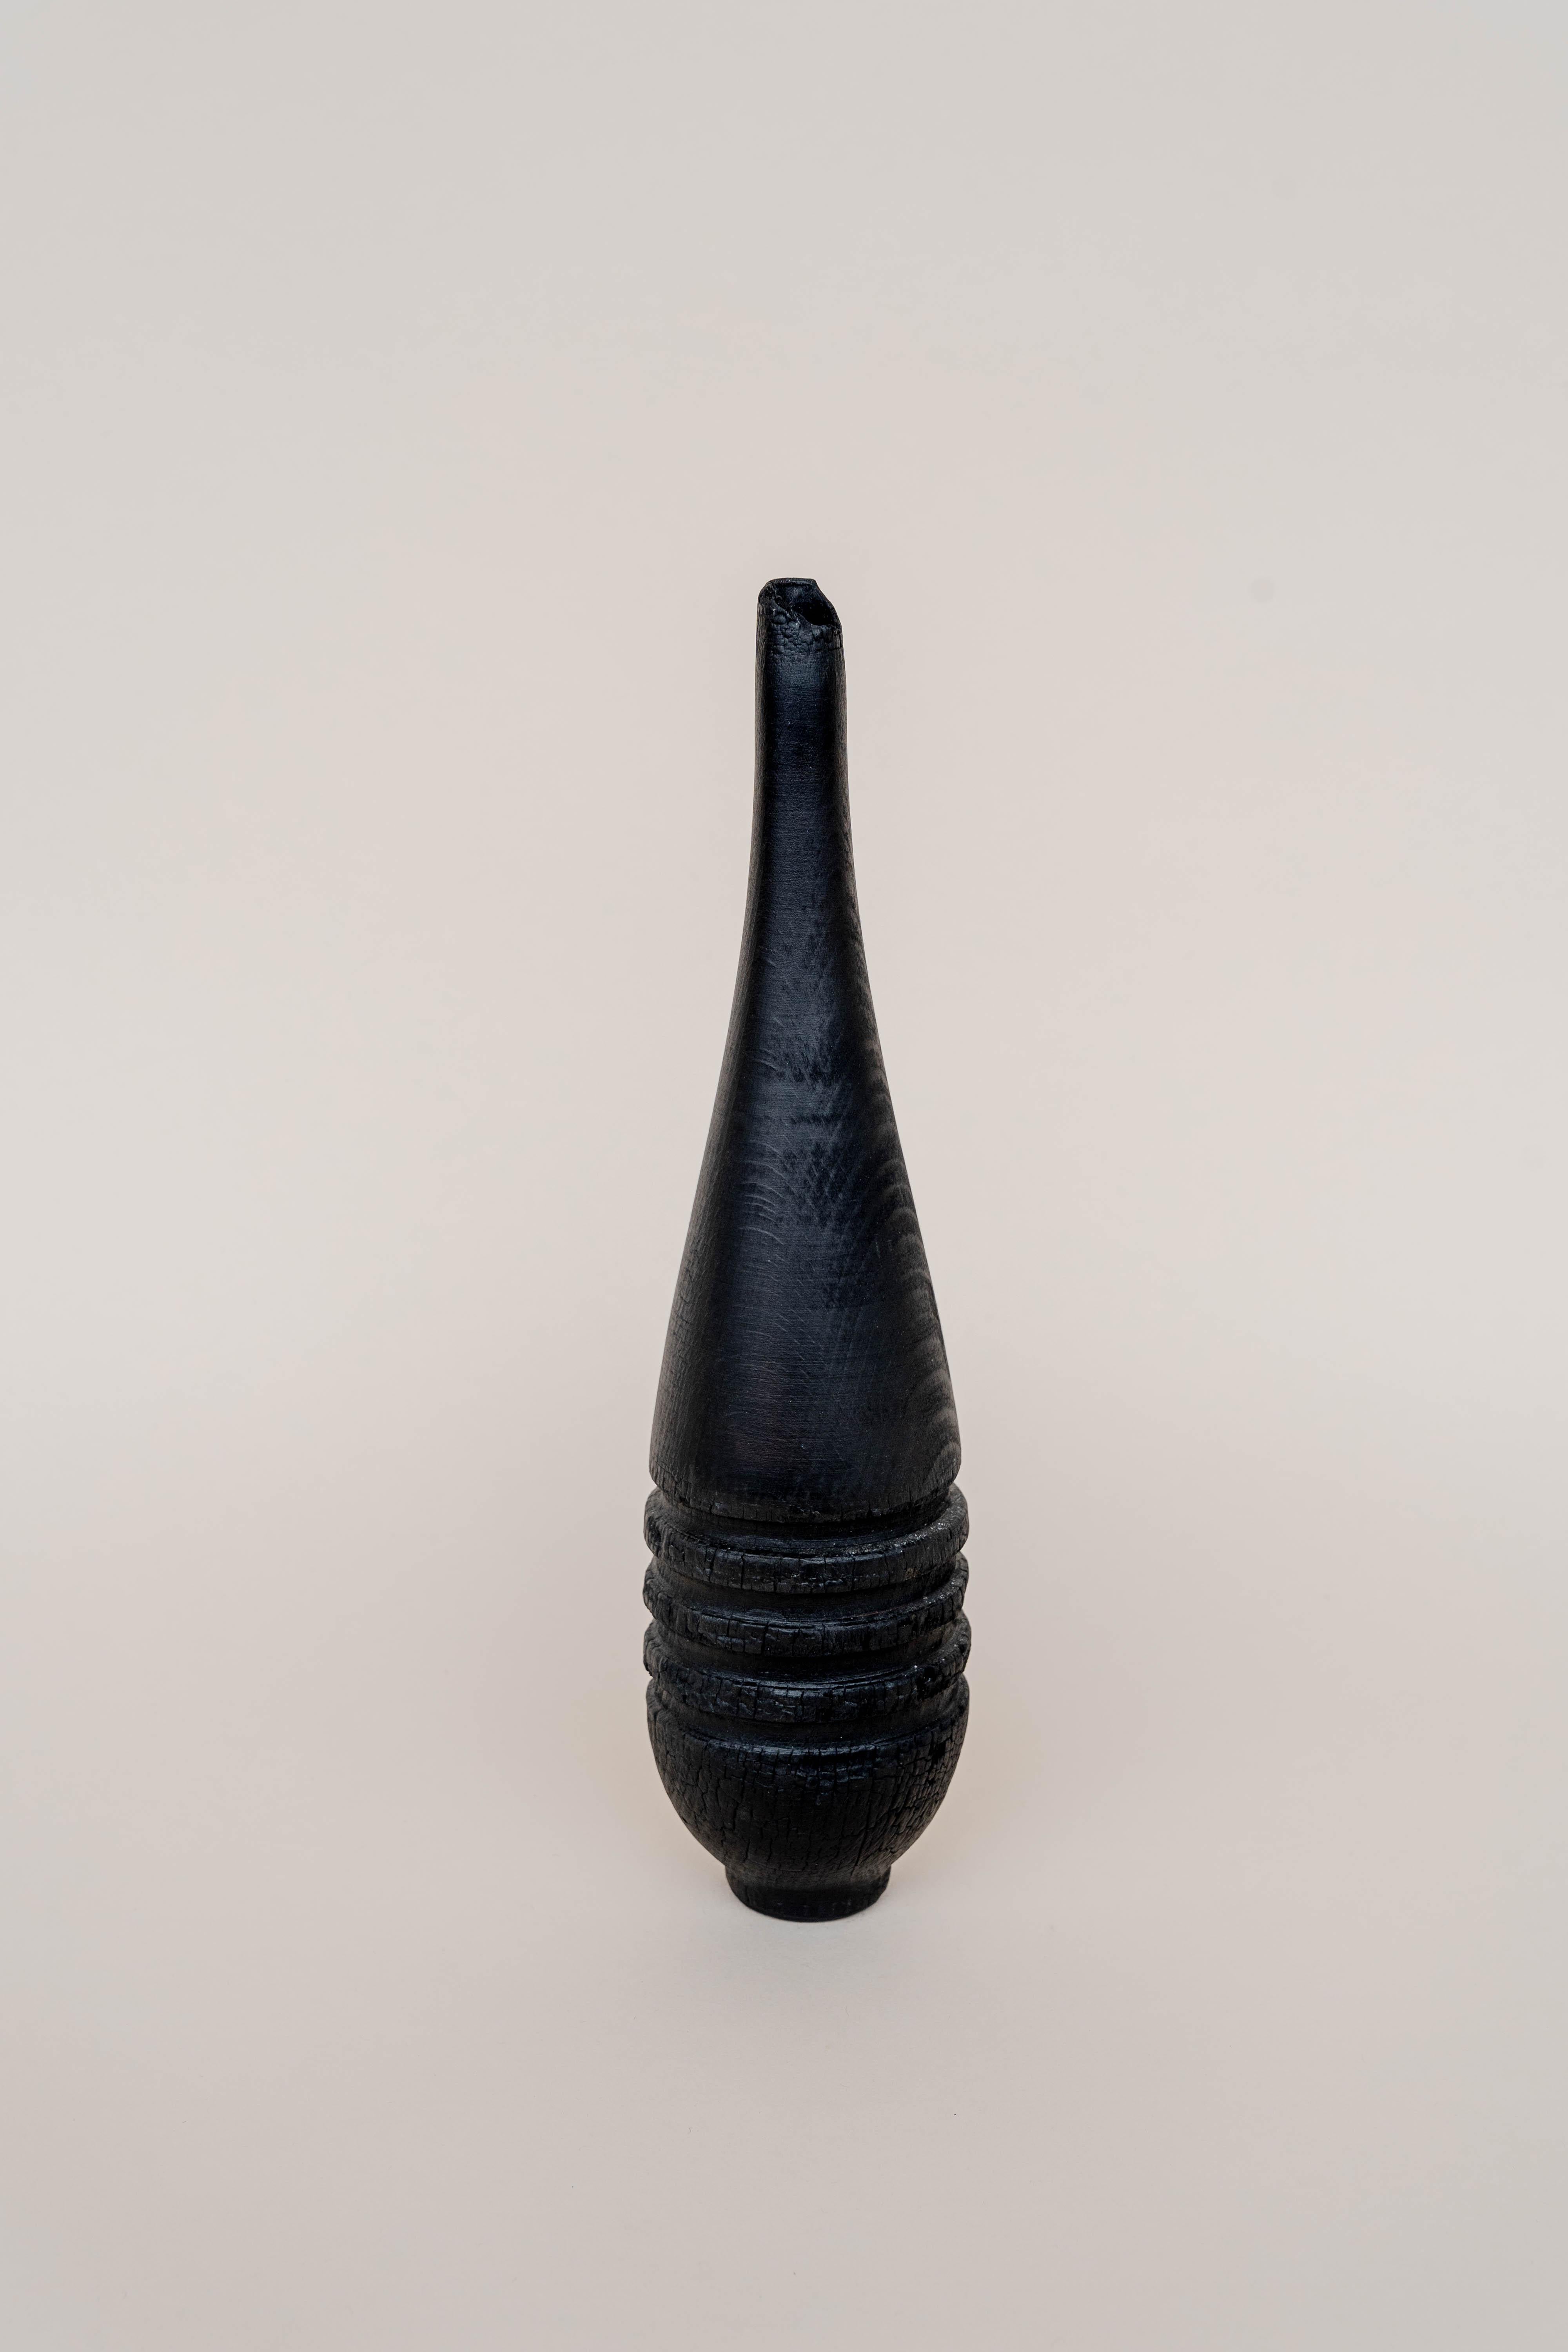 Medium Burnt Vase by Daniel Elkayam For Sale 1